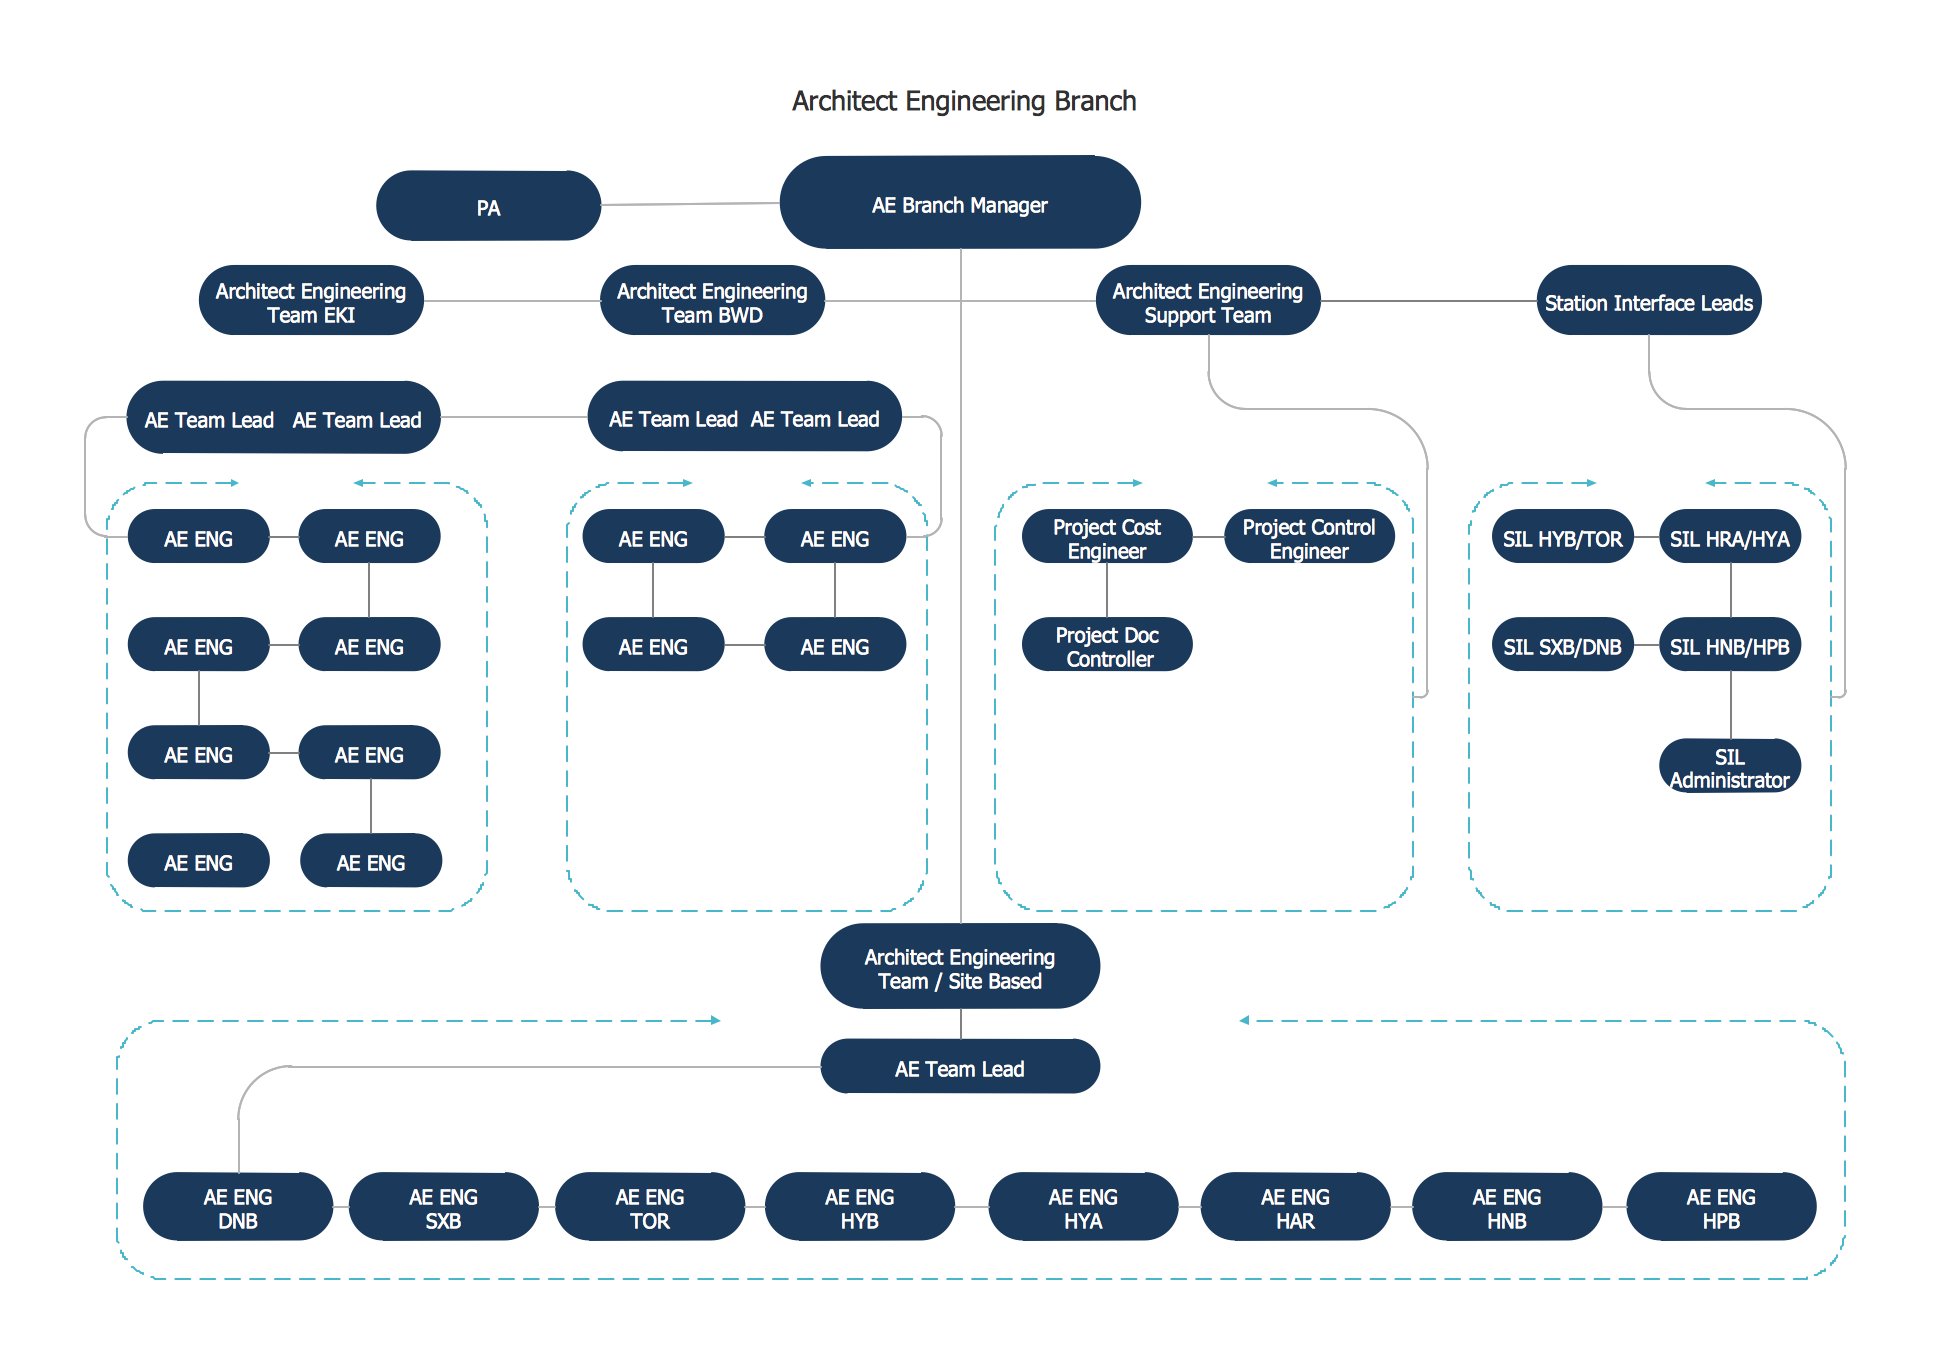 Chart Diagram Flowchart Hierarchy Organizational Diag Vrogue Co